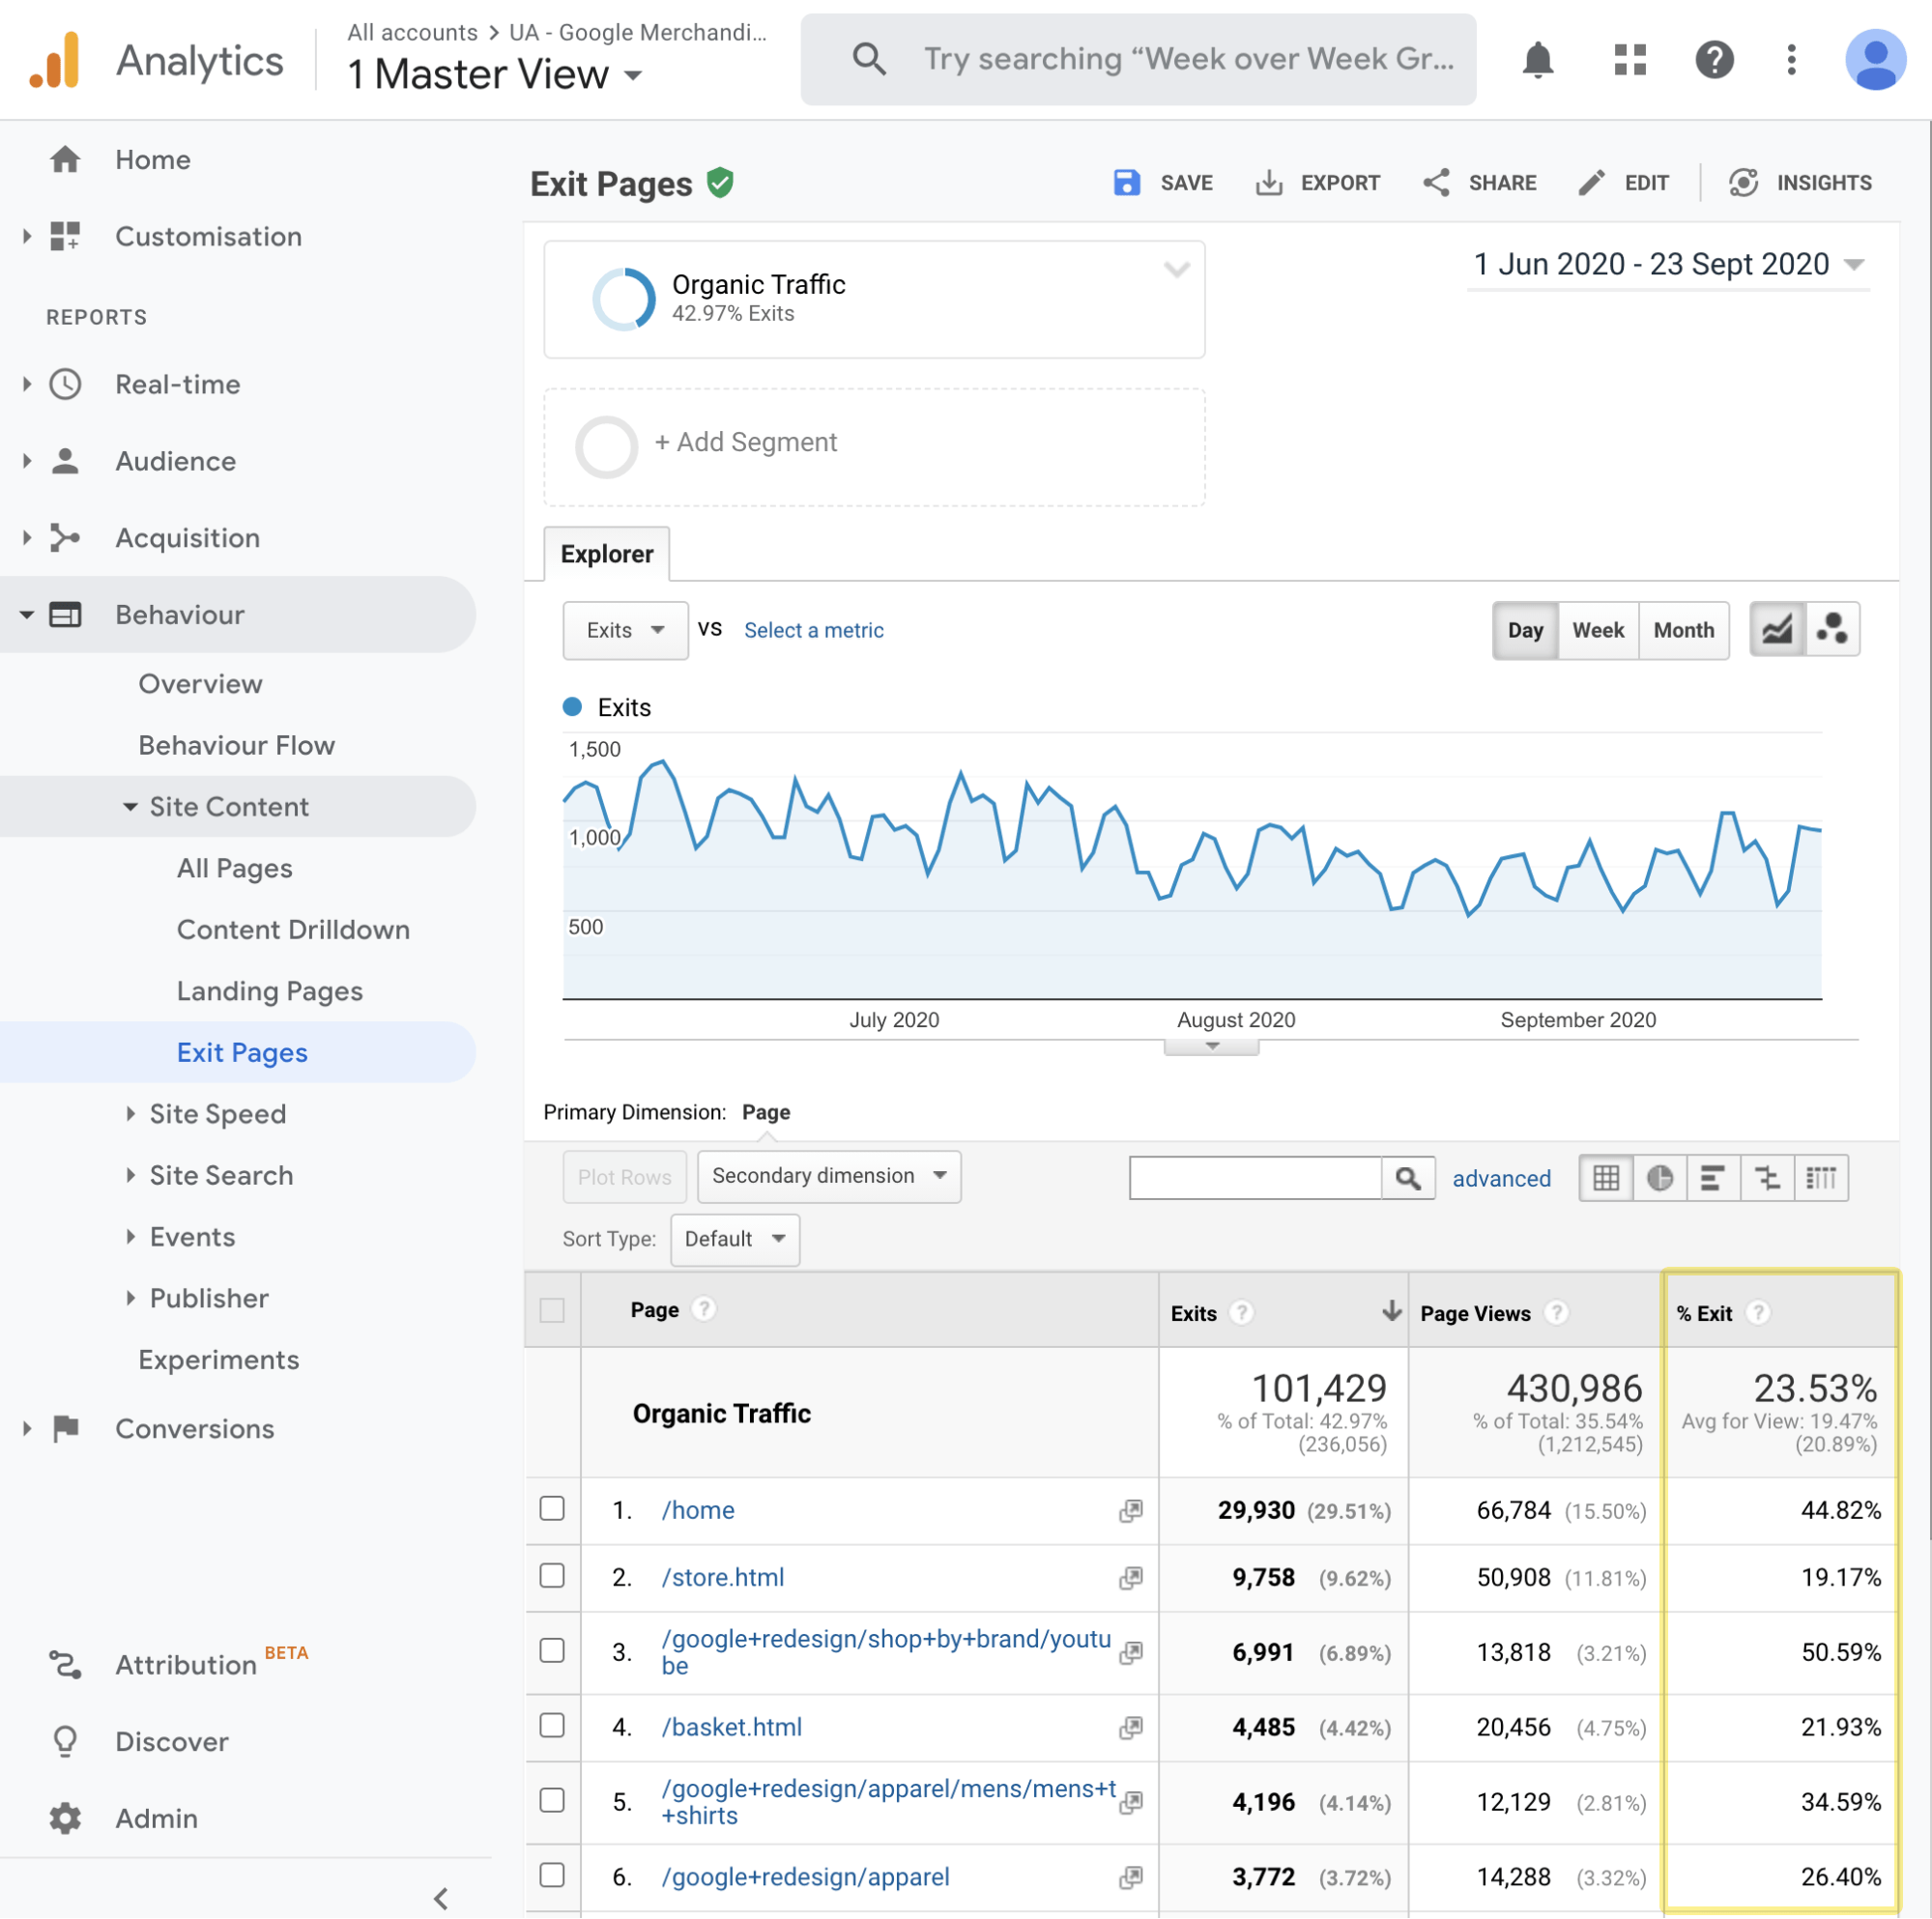 seo metrics worth tracking